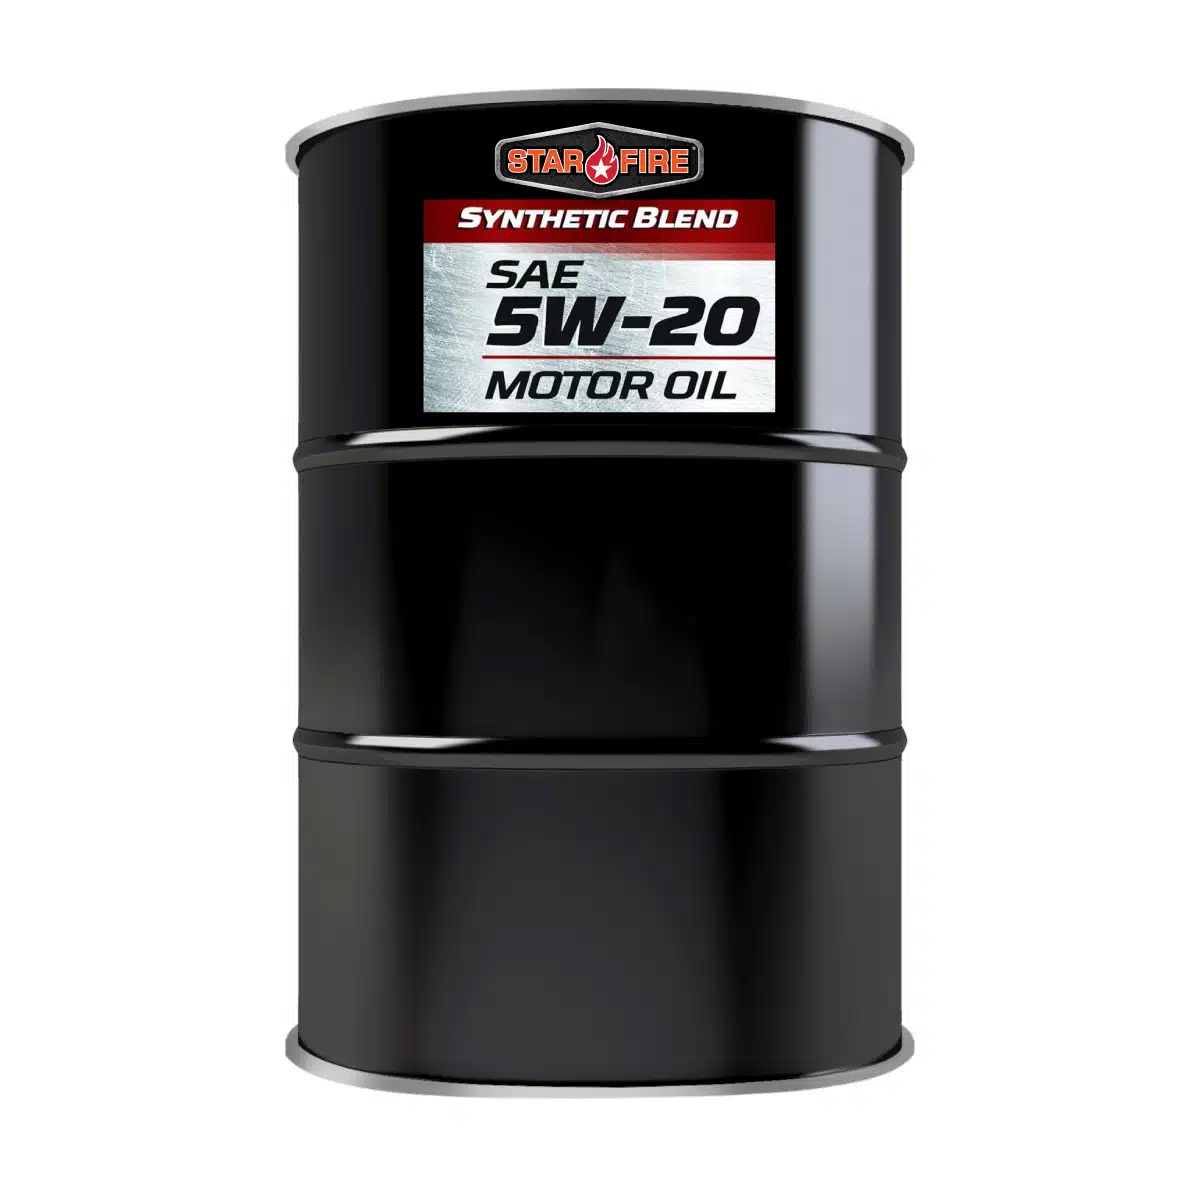 53 Gallon drum Motor oil 5W-20